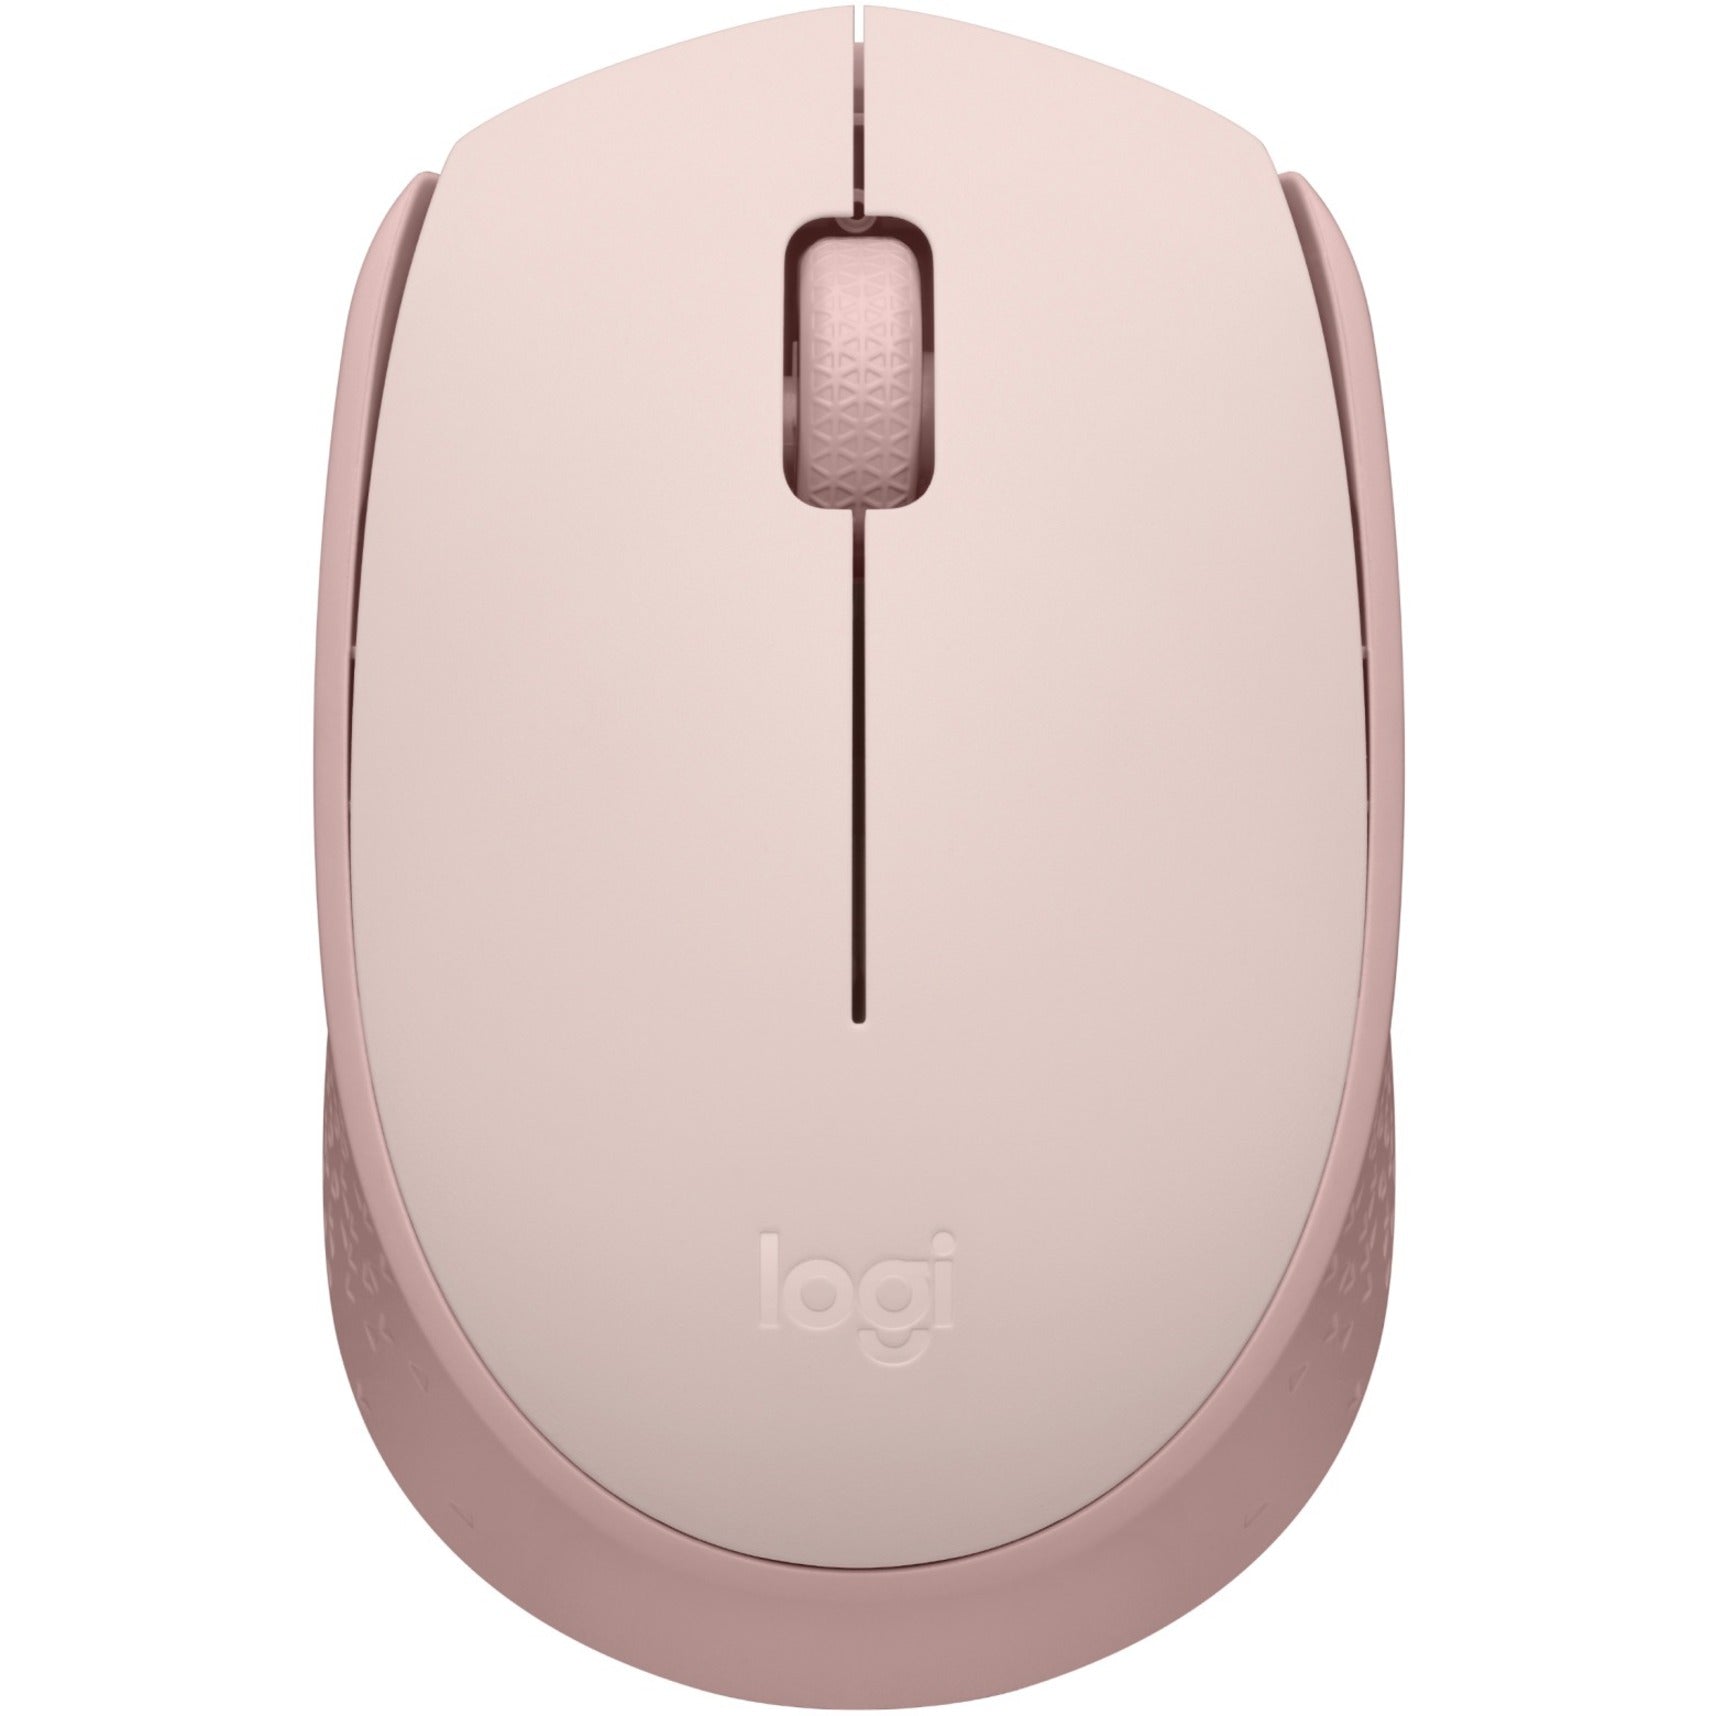 Logitech 910-006862 M170 Mouse, Wireless 2.4 GHz Radio Frequency, USB Receiver, 1 Year Warranty